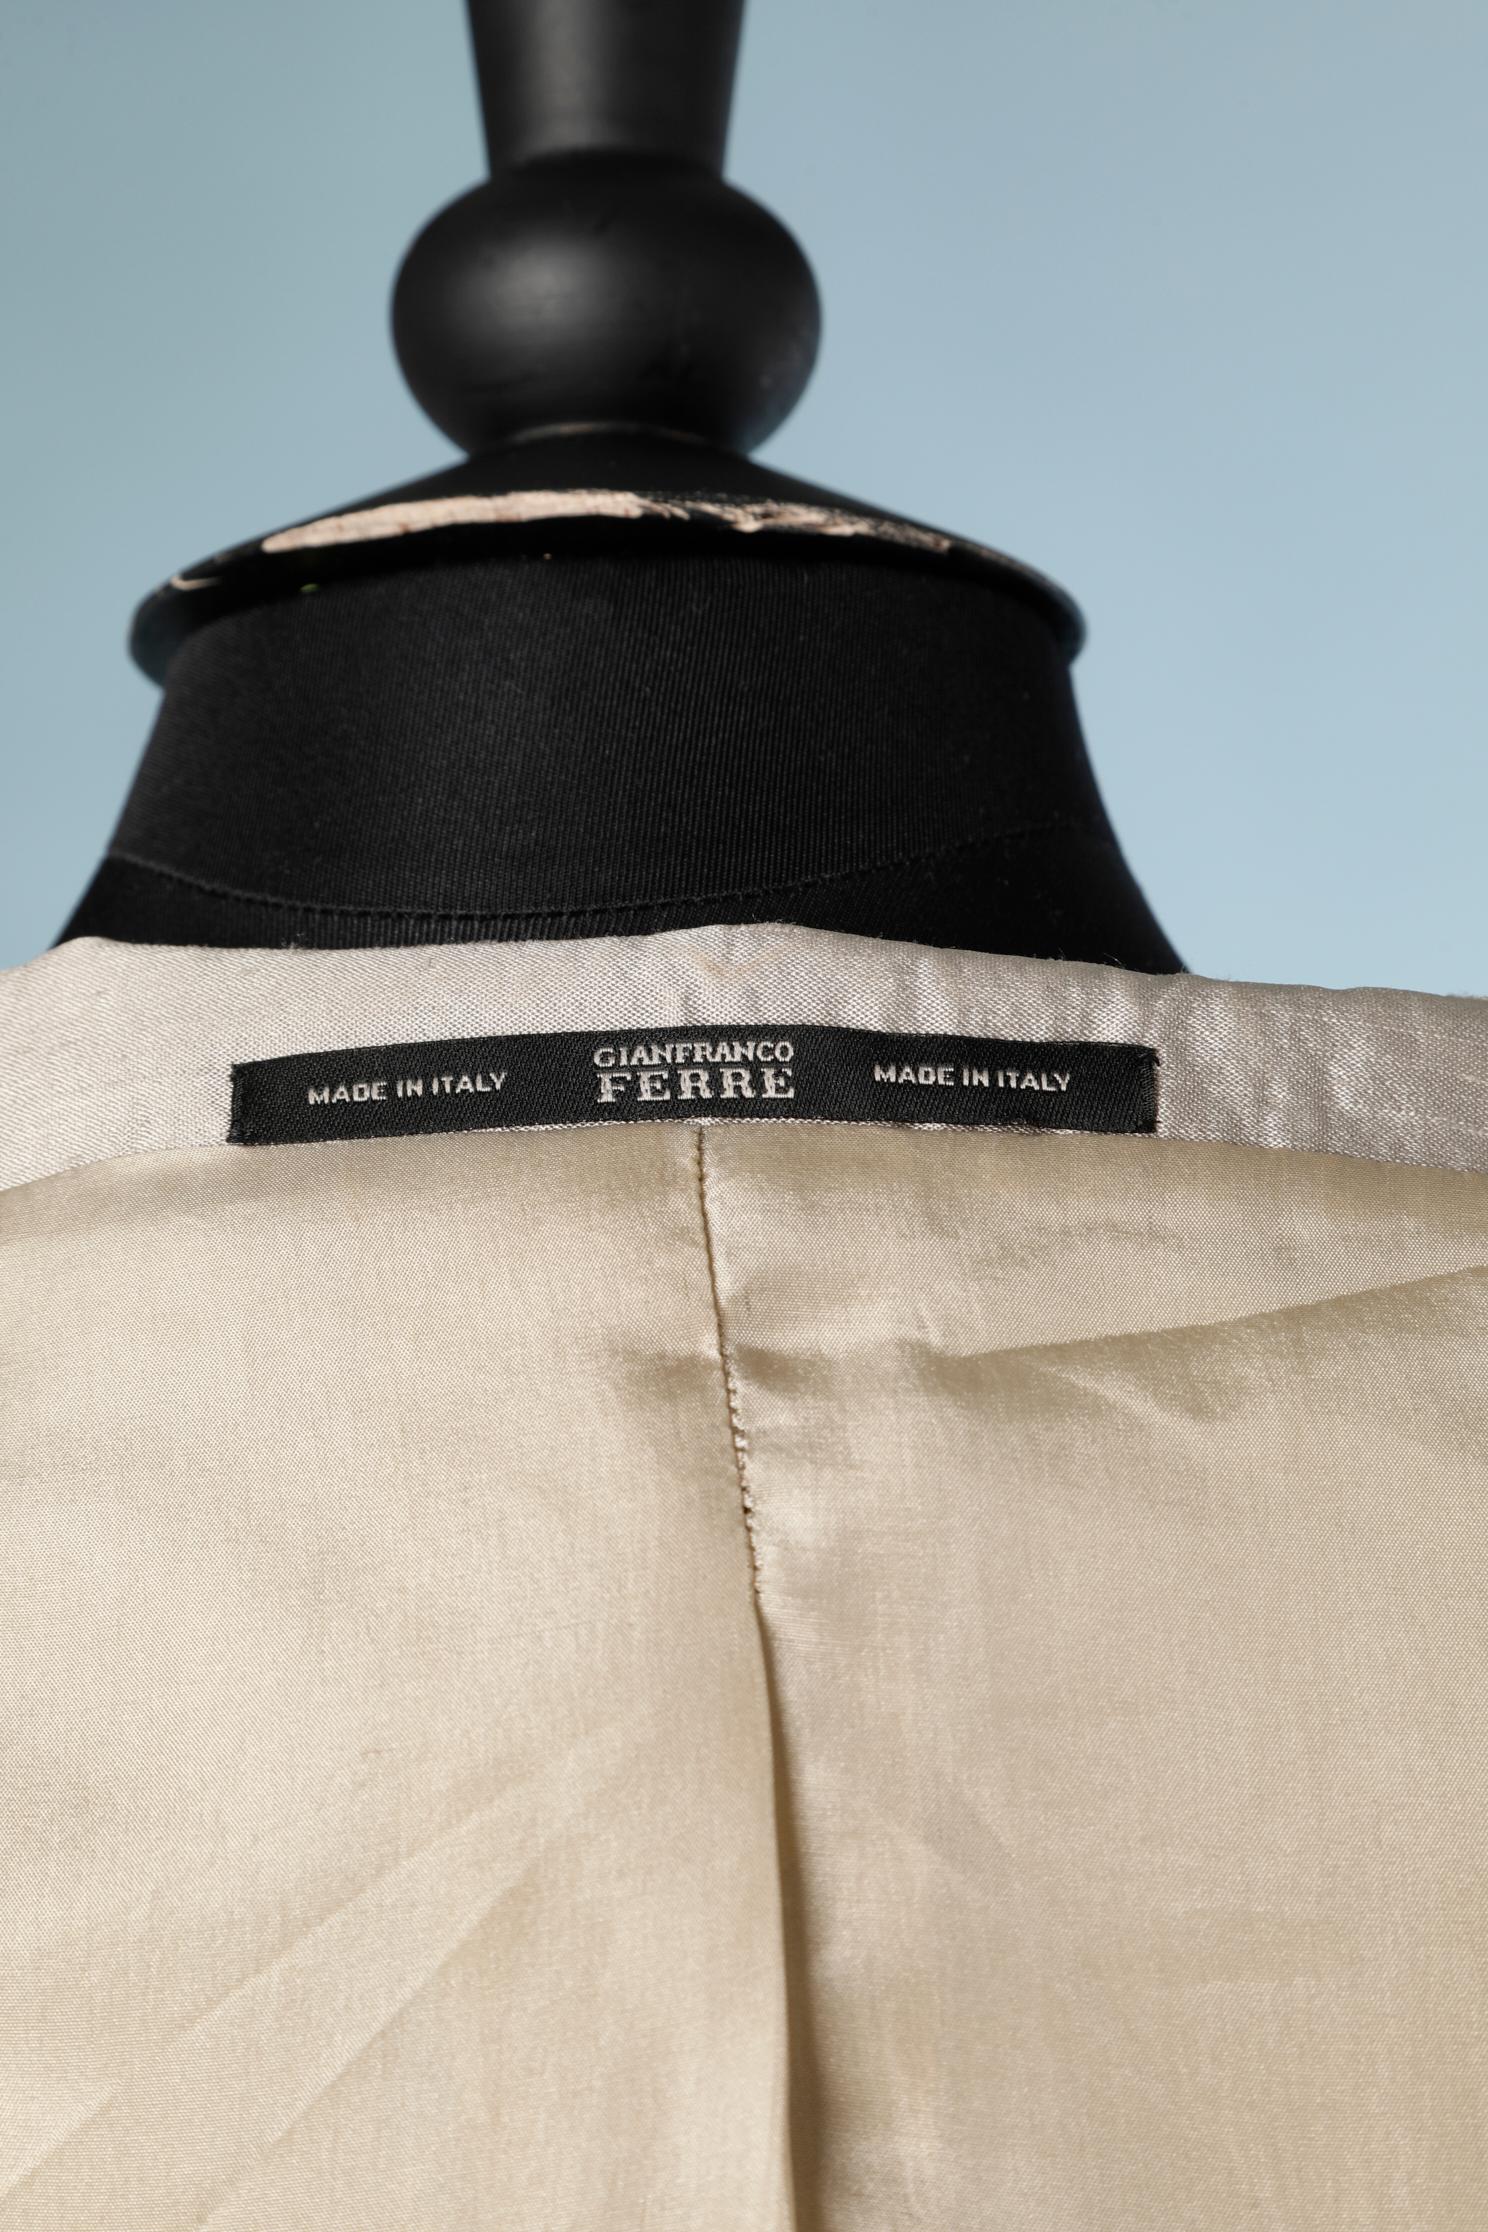 Pale grey silk evening skirt-suit Gianfranco Ferré  For Sale 3